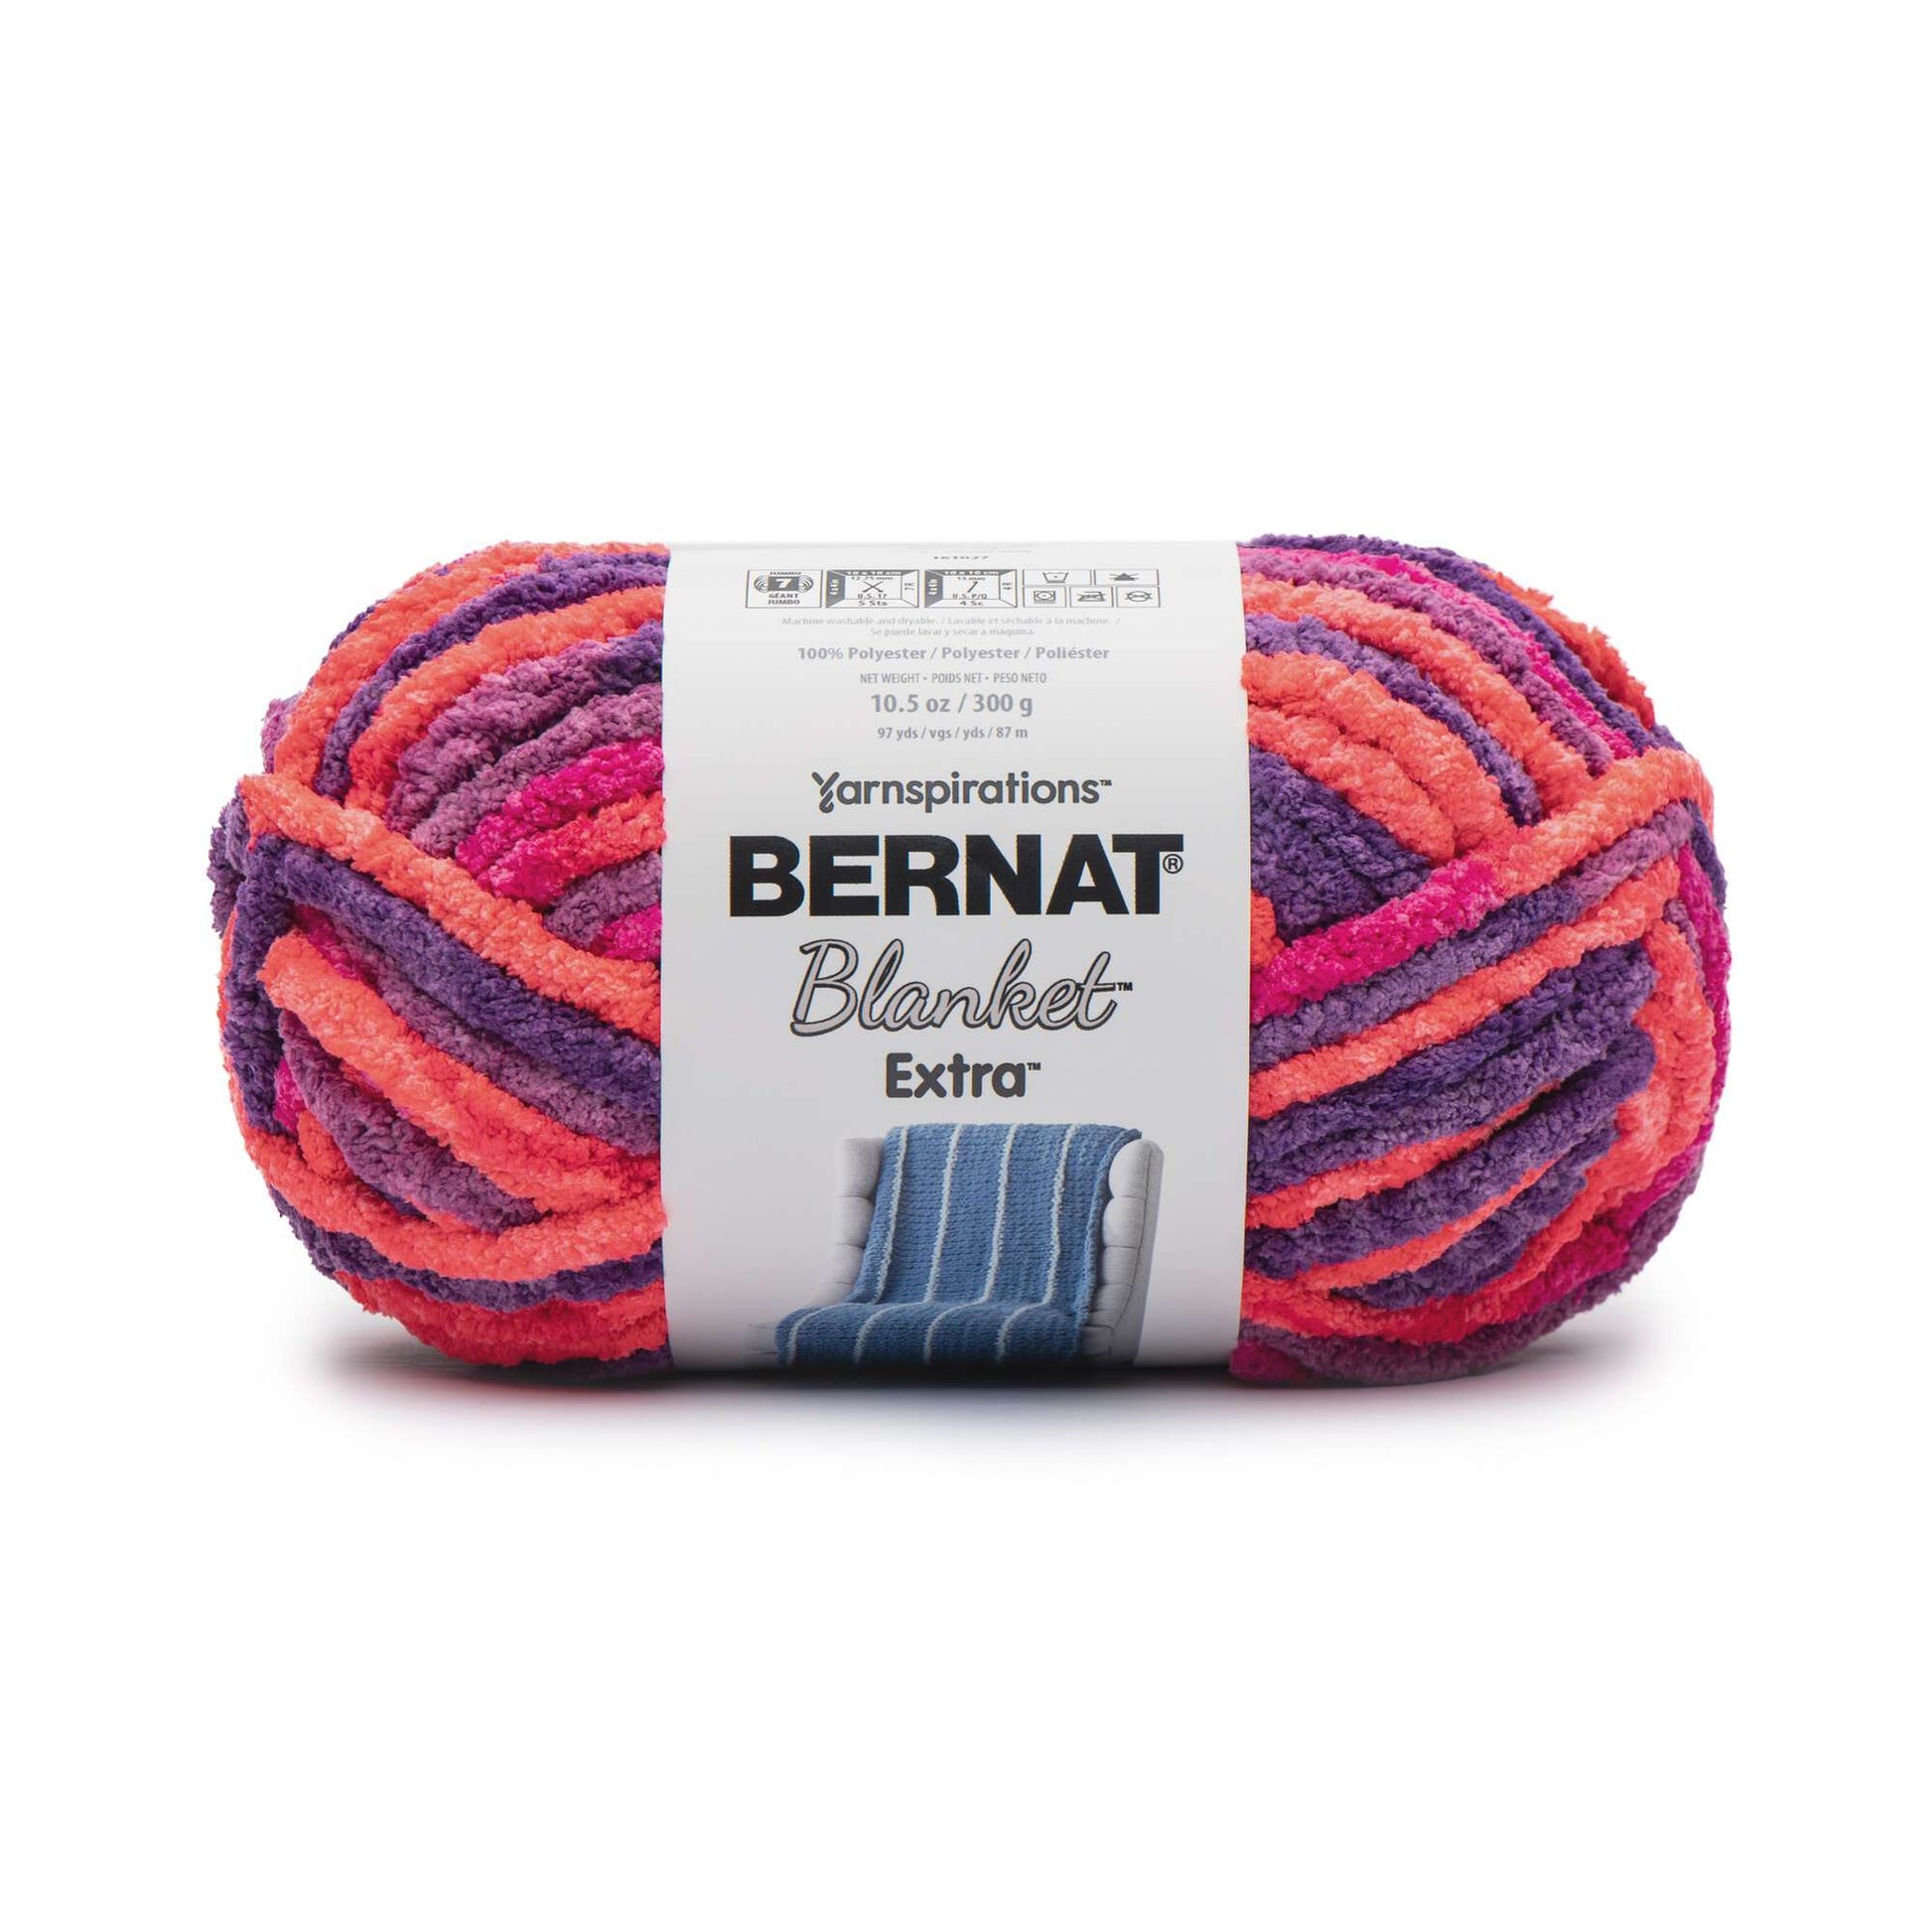 Bernat Blanket Extra Yarn (300g/10.5oz) - Clearance Shades* Plummy Brights Varg